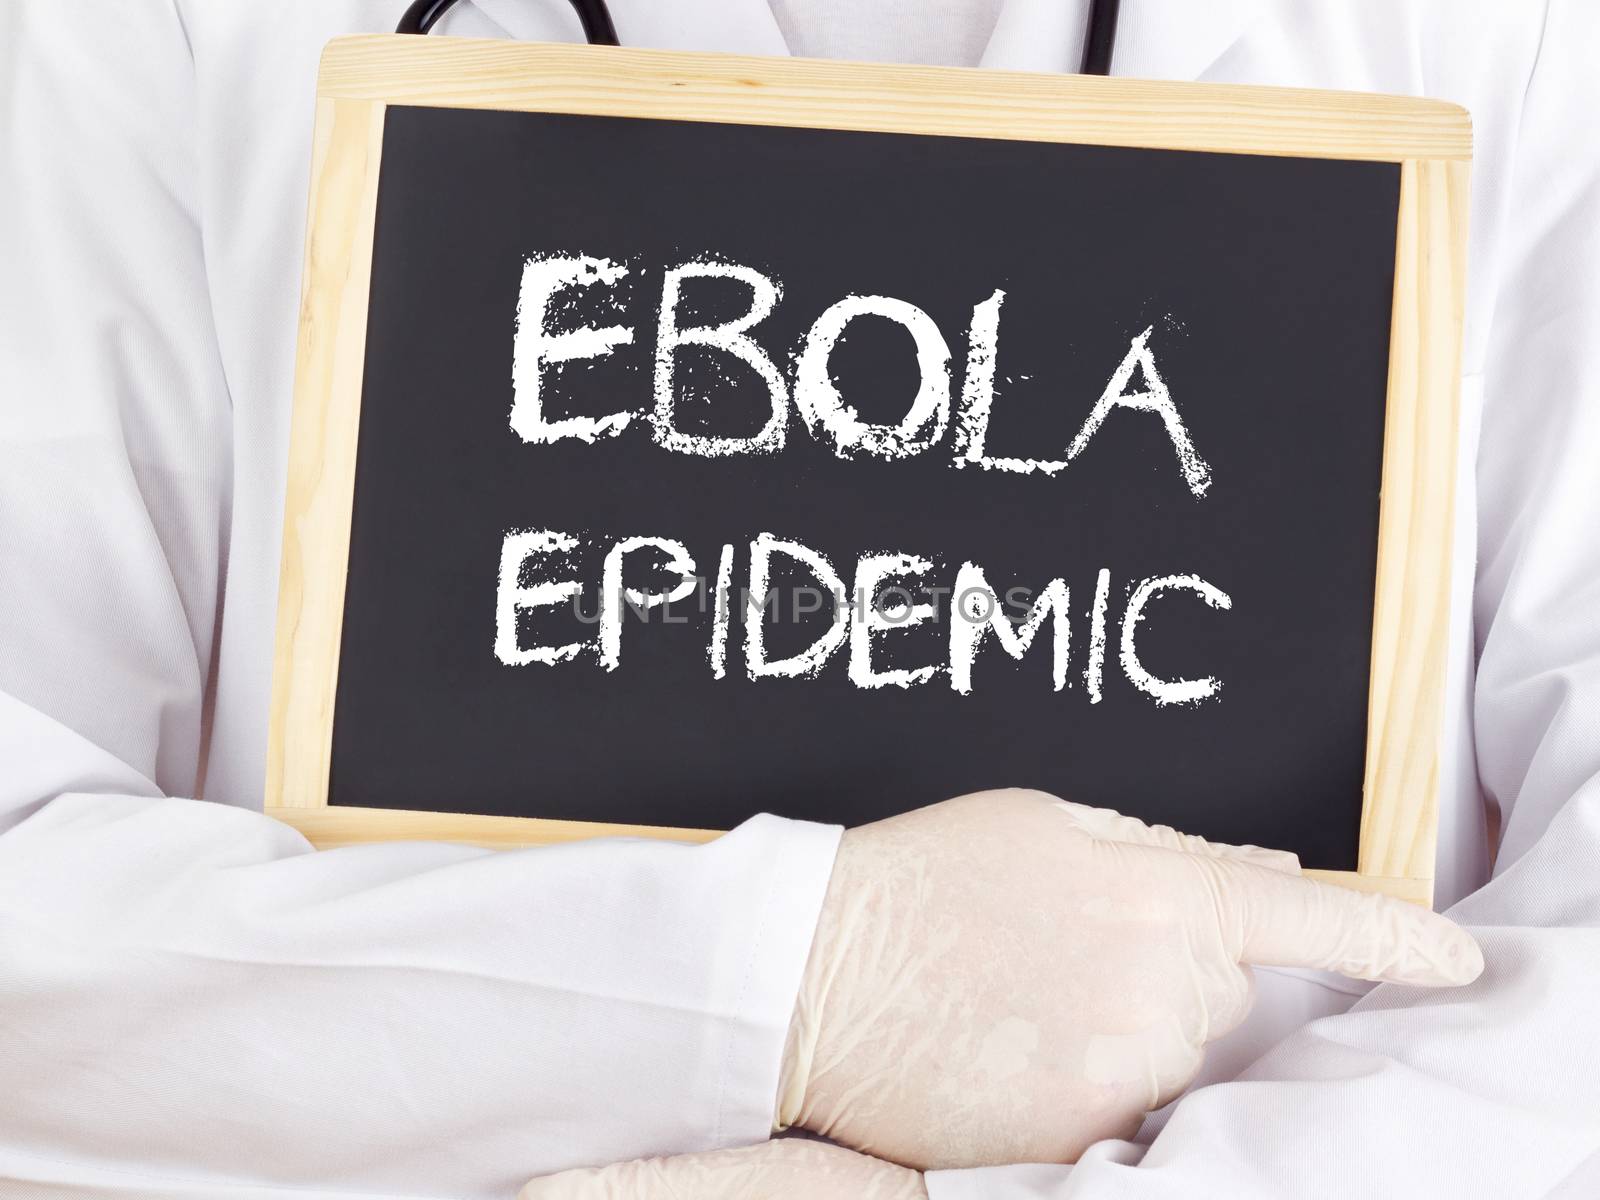 Doctor shows information: Ebola epidemic